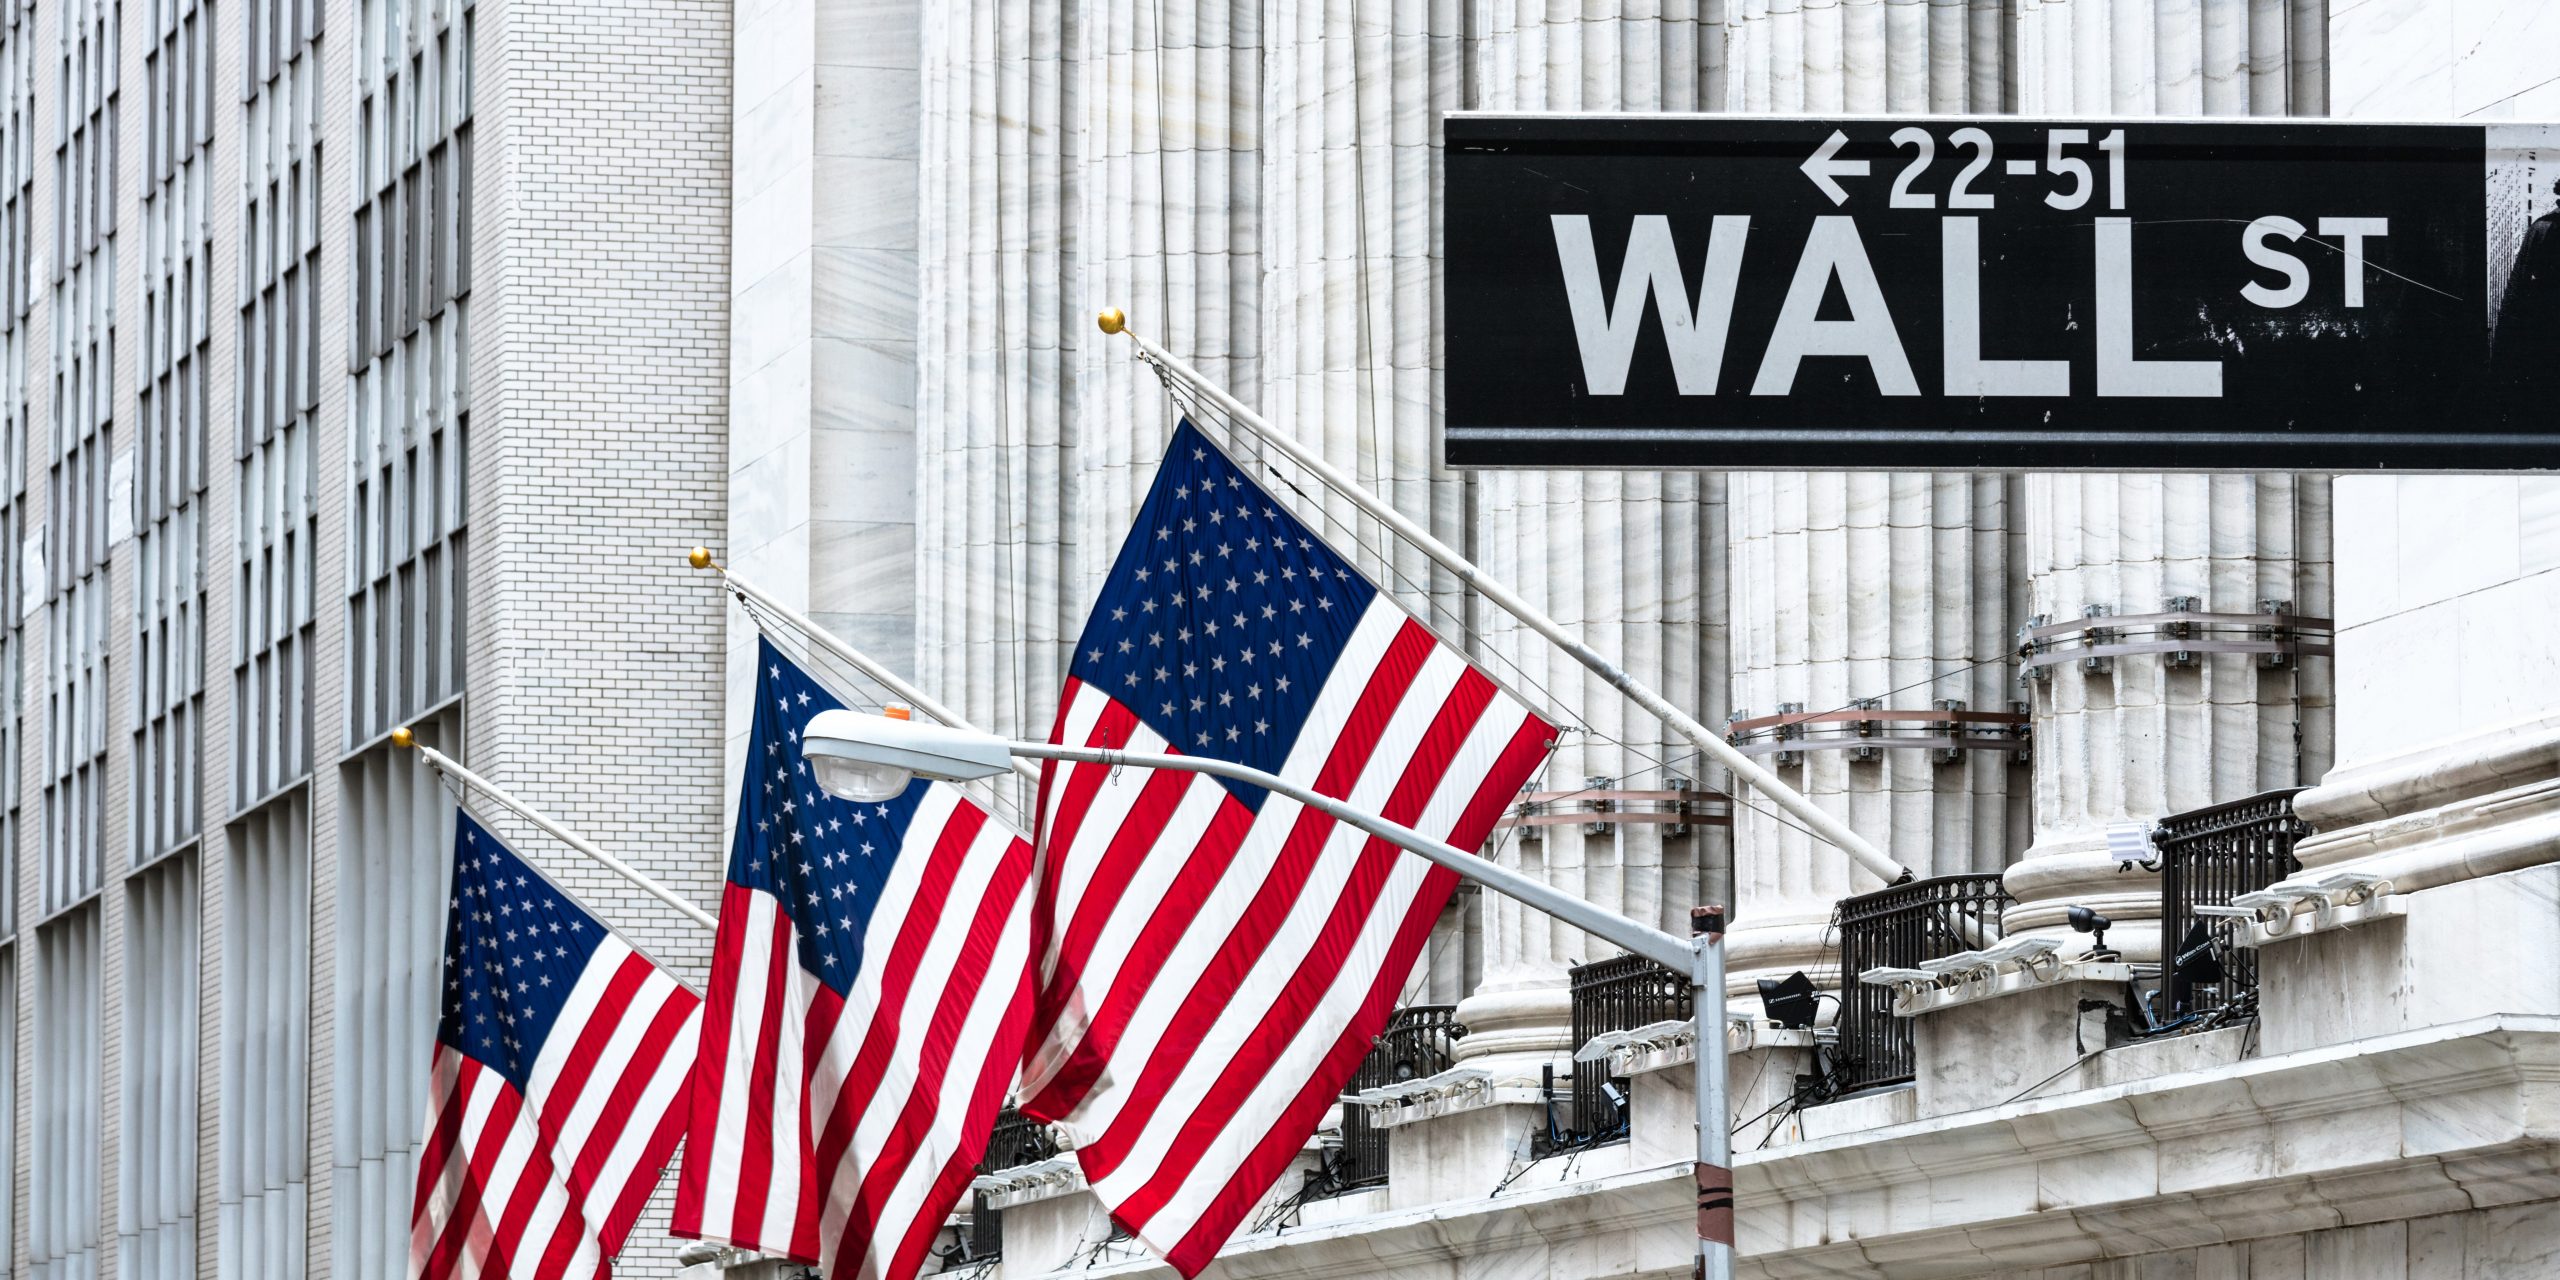 New York Stock Exchange, Wall street, Manhattan, New York, USA